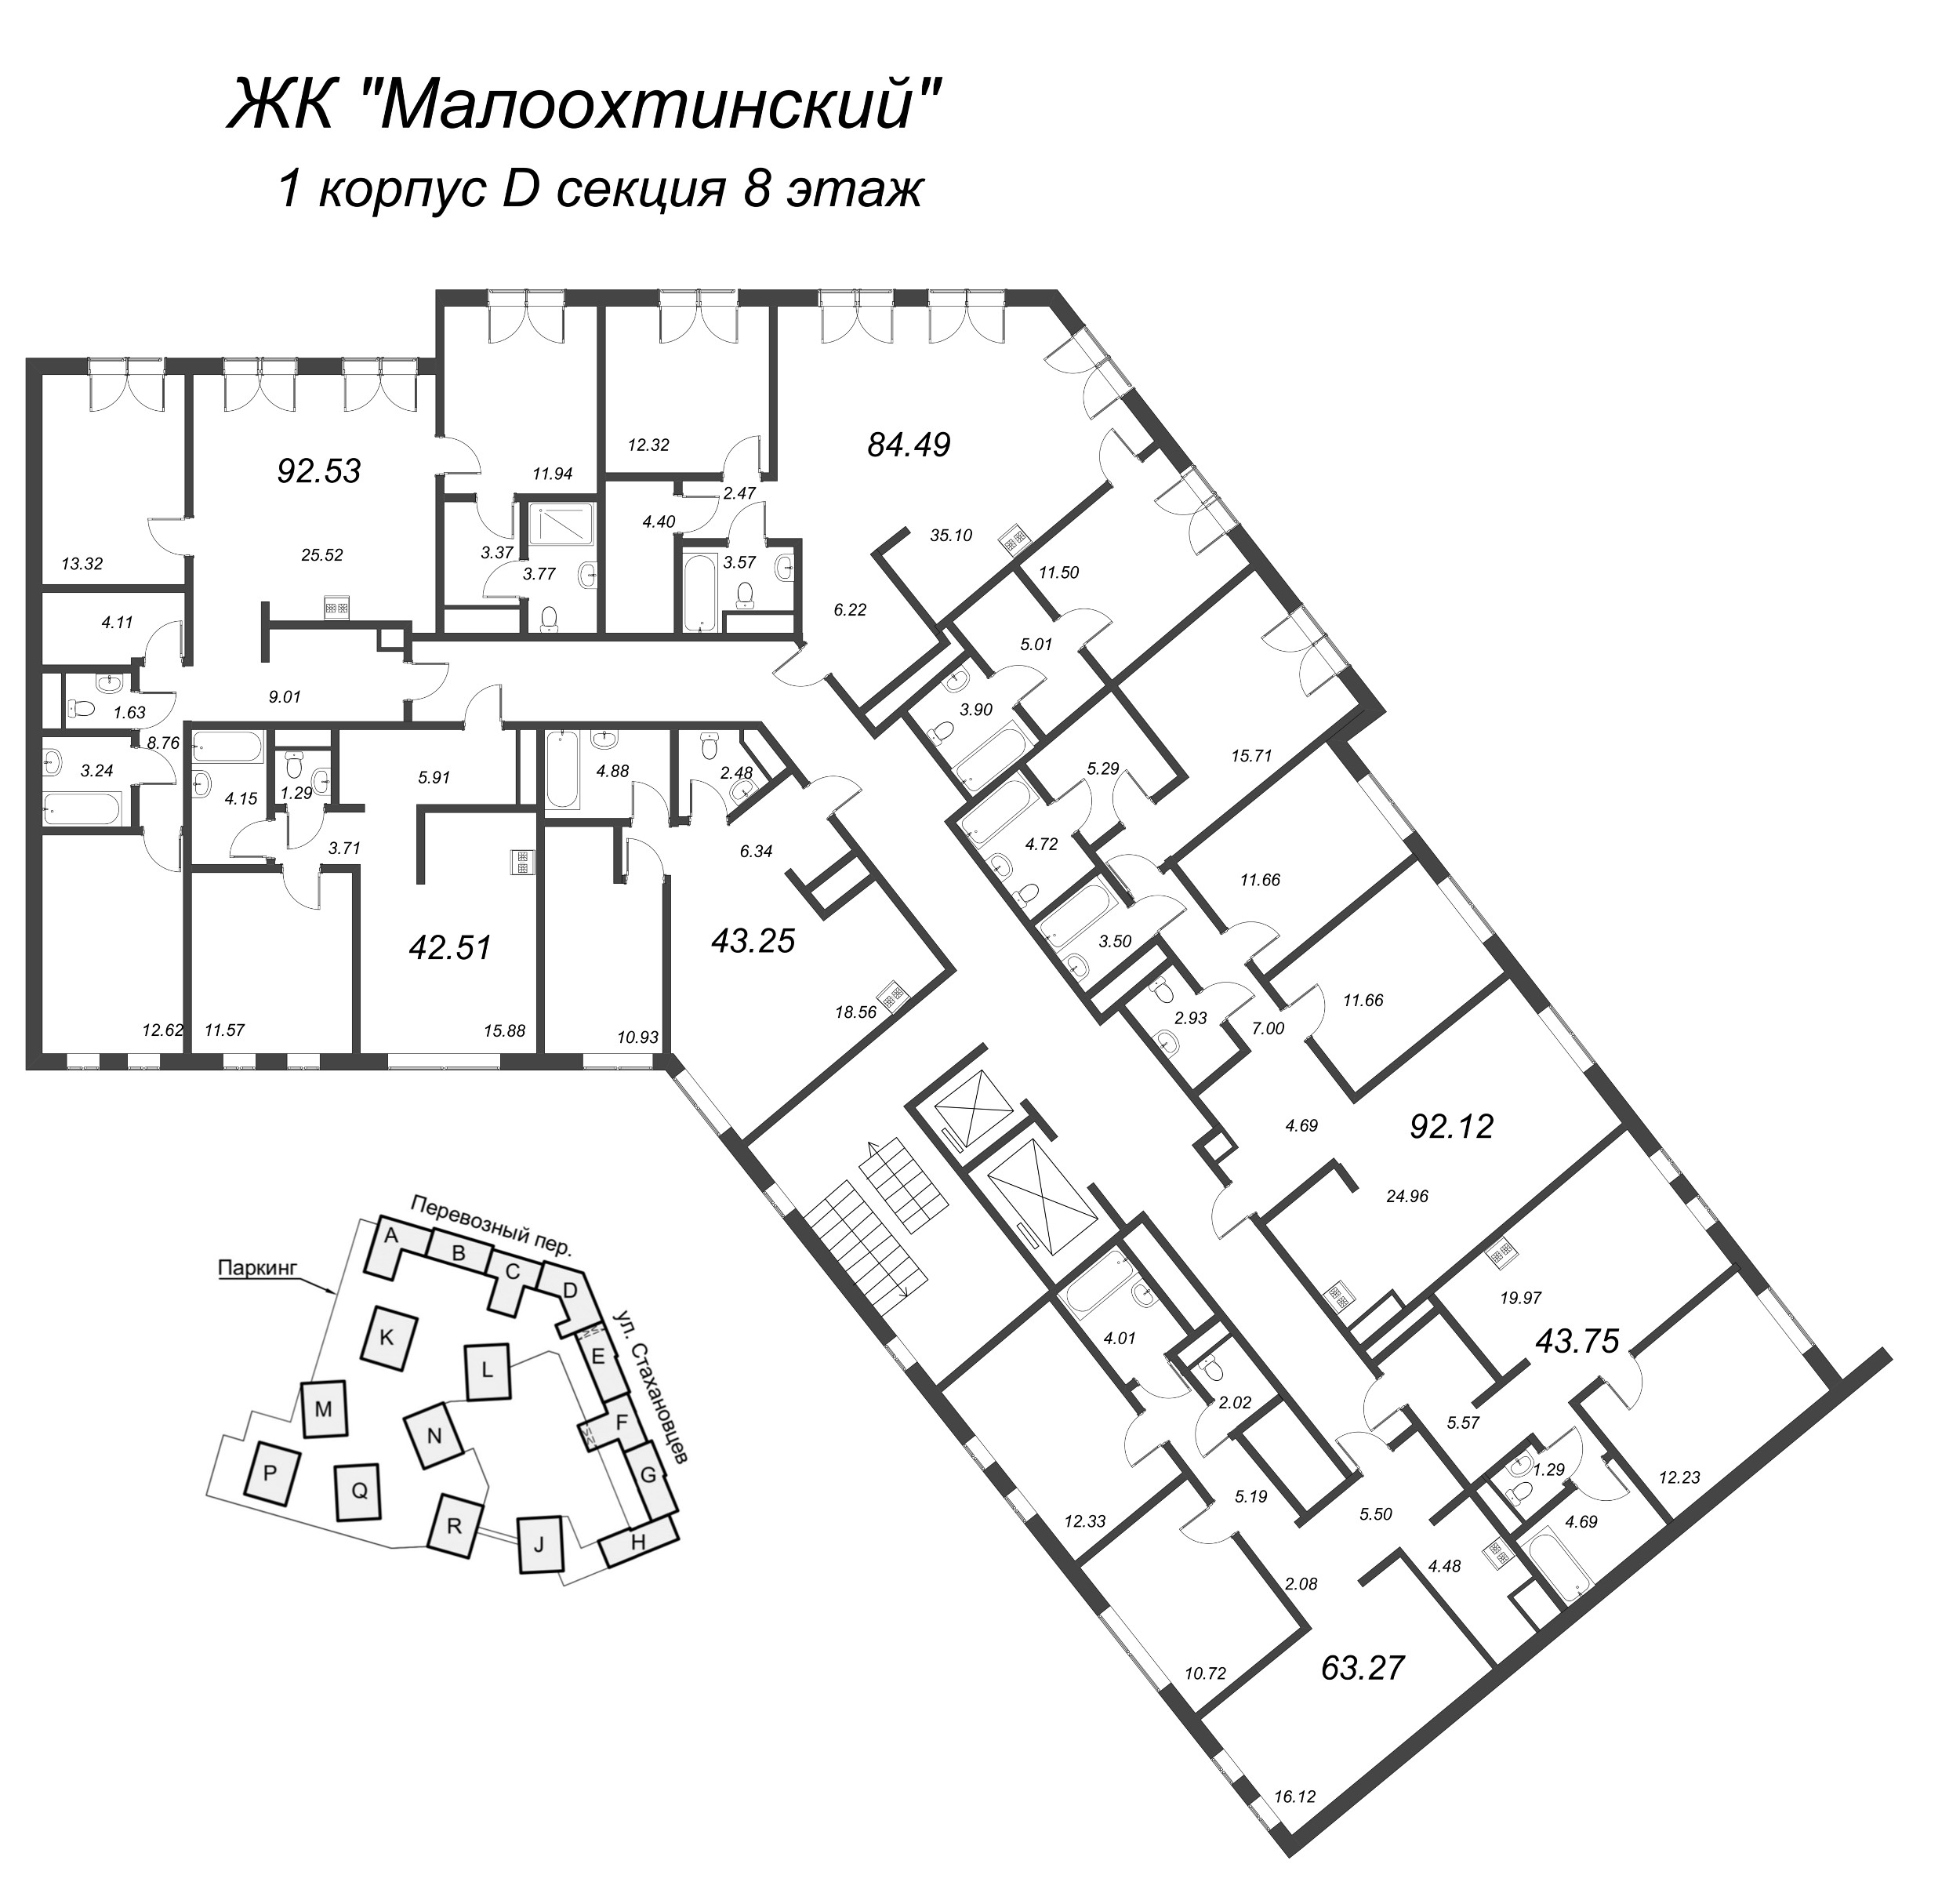 2-комнатная (Евро) квартира, 44.2 м² - планировка этажа